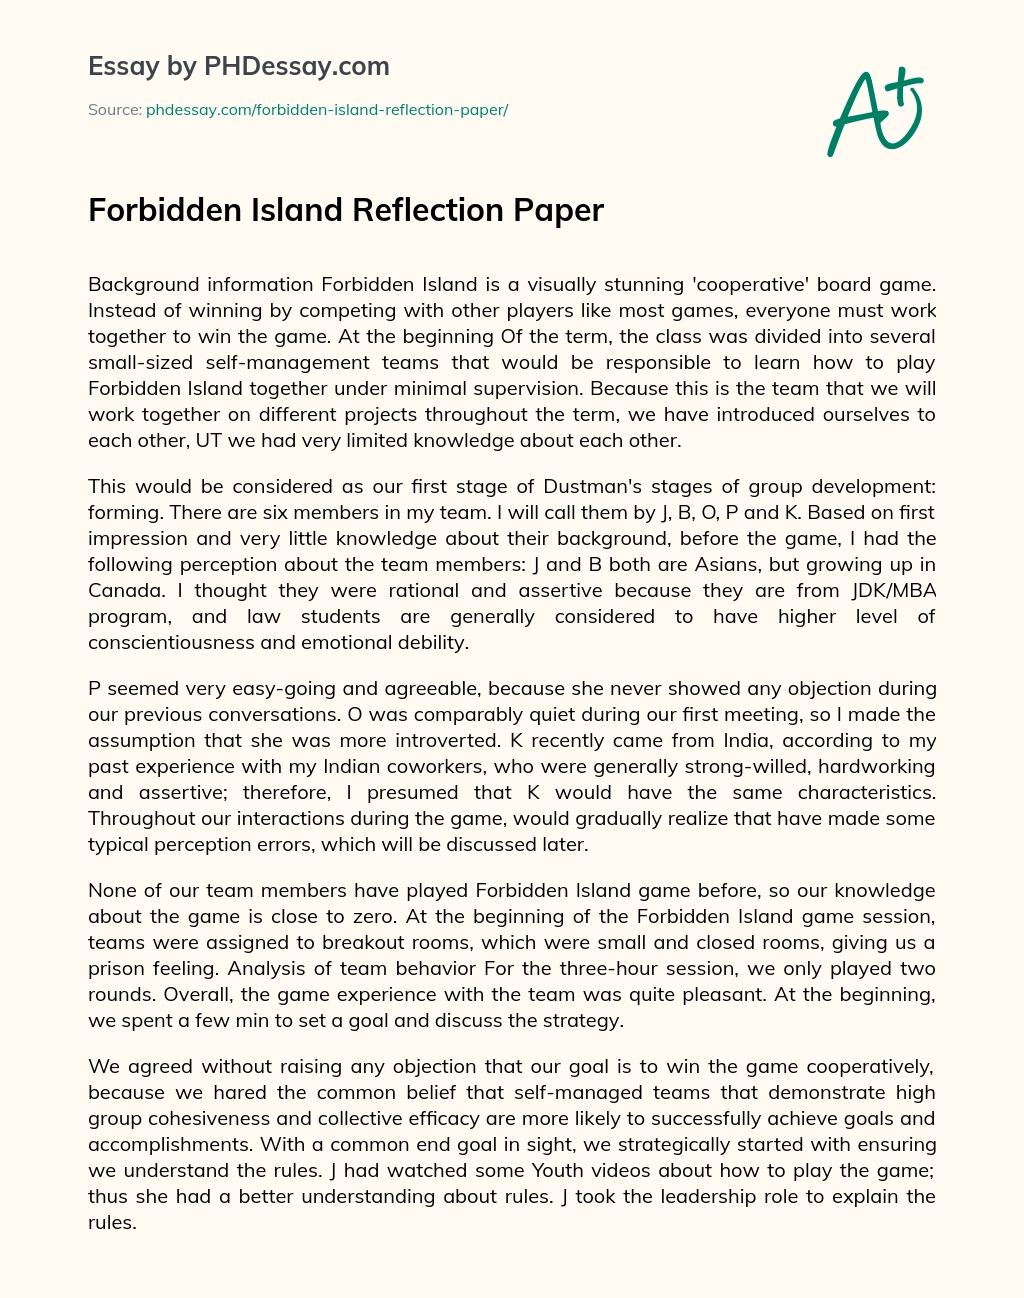 Forbidden Island Reflection Paper essay